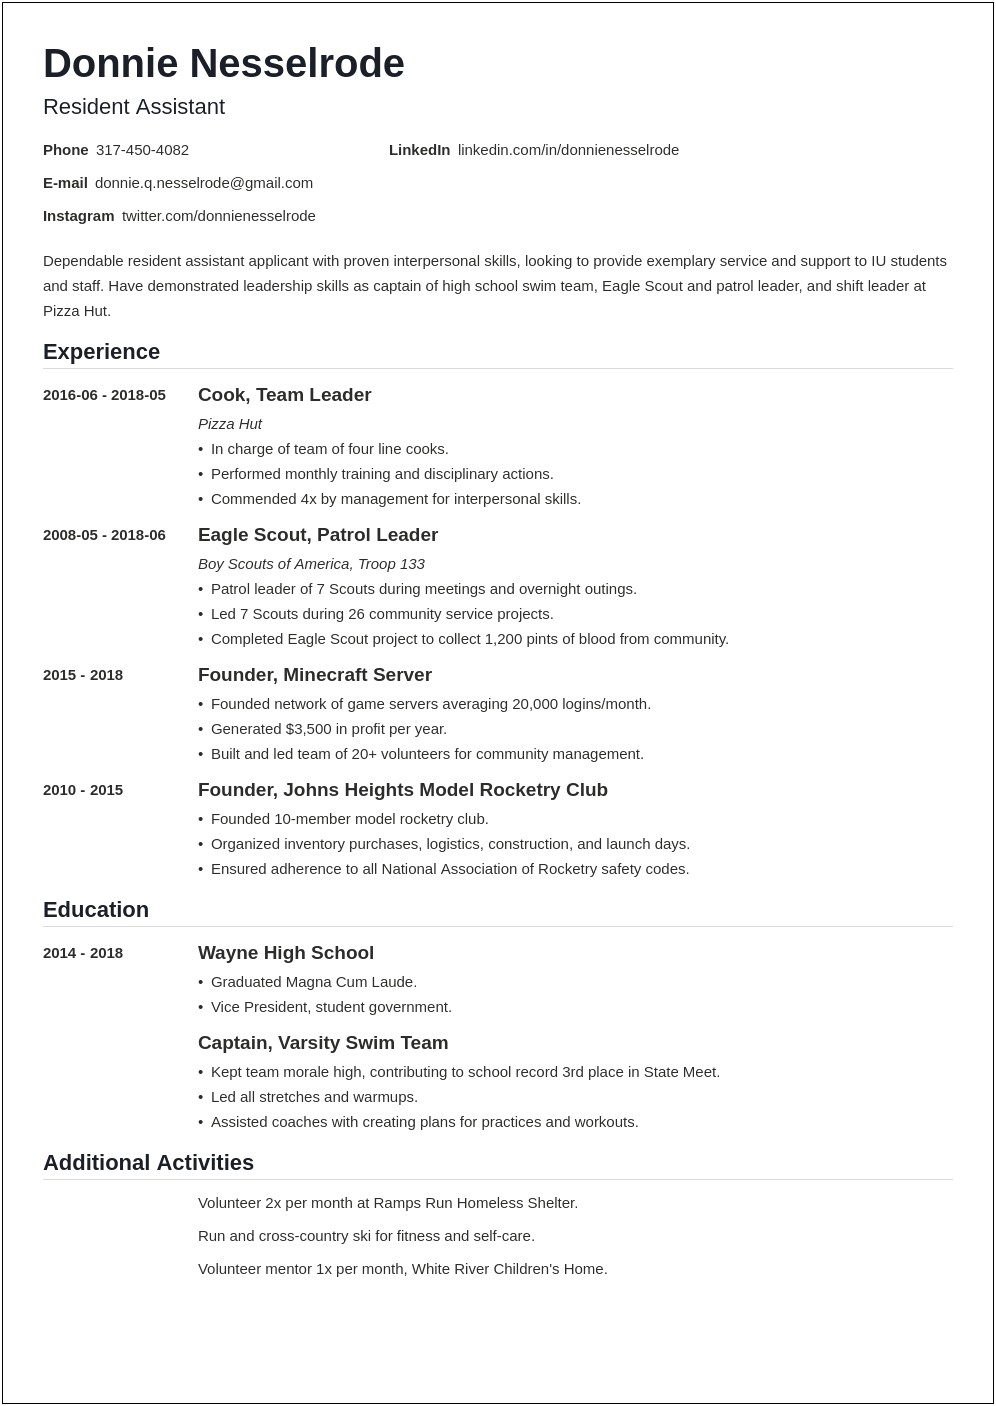 Resume Description Help For Pizza Hut Shift Manager